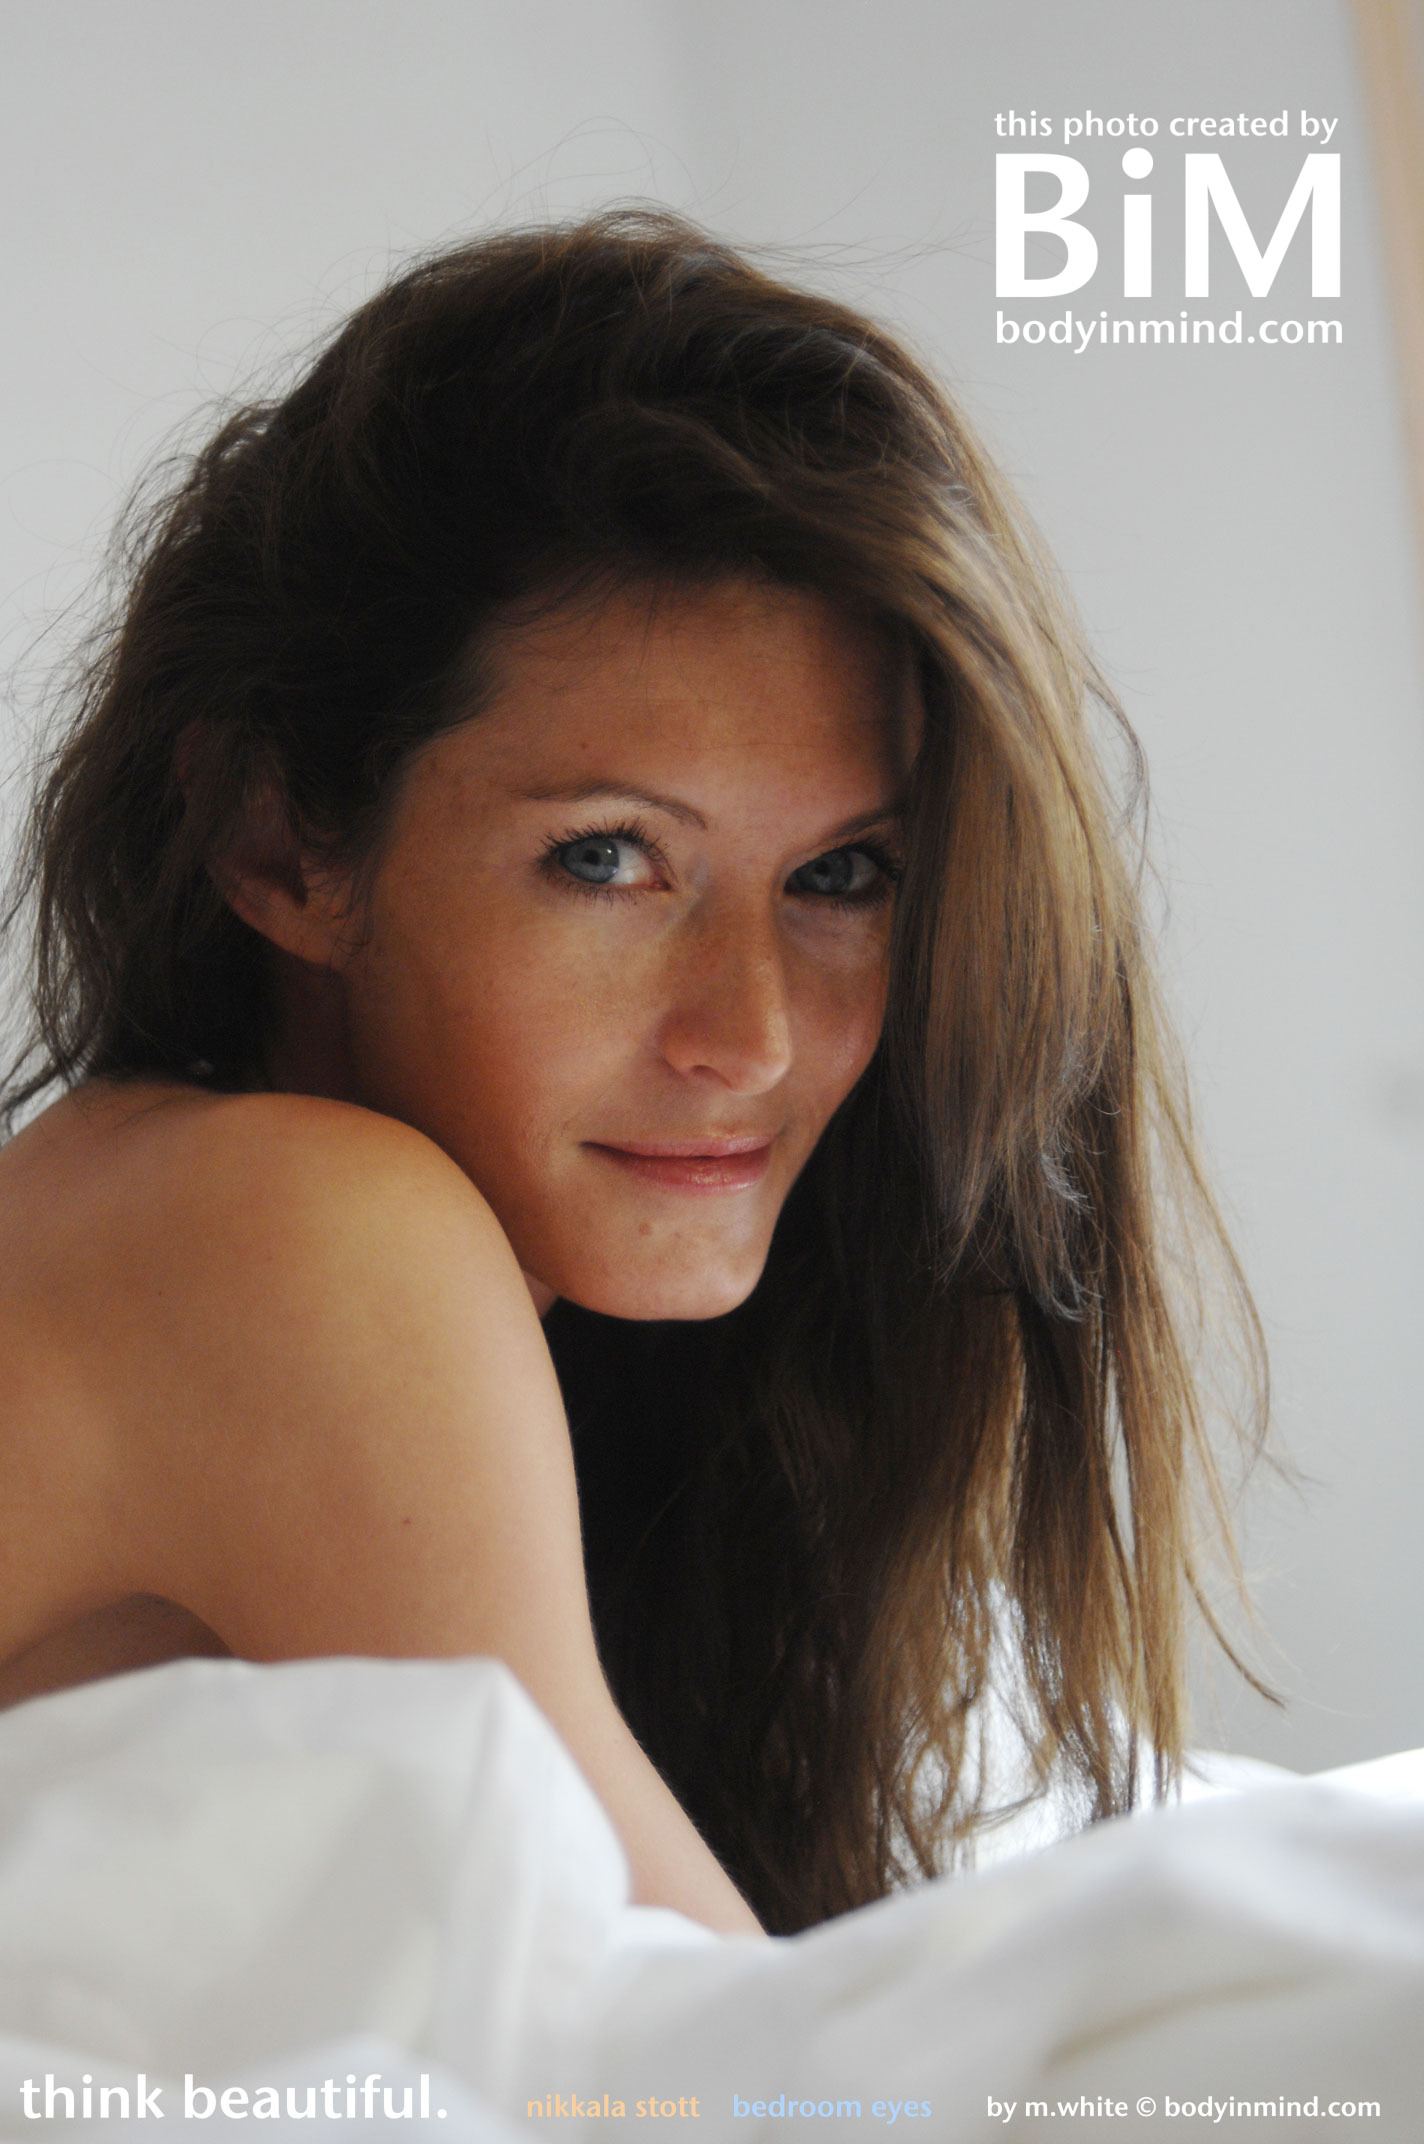 Nikkala Stott shows off her bedroom eyes for Body in Mind